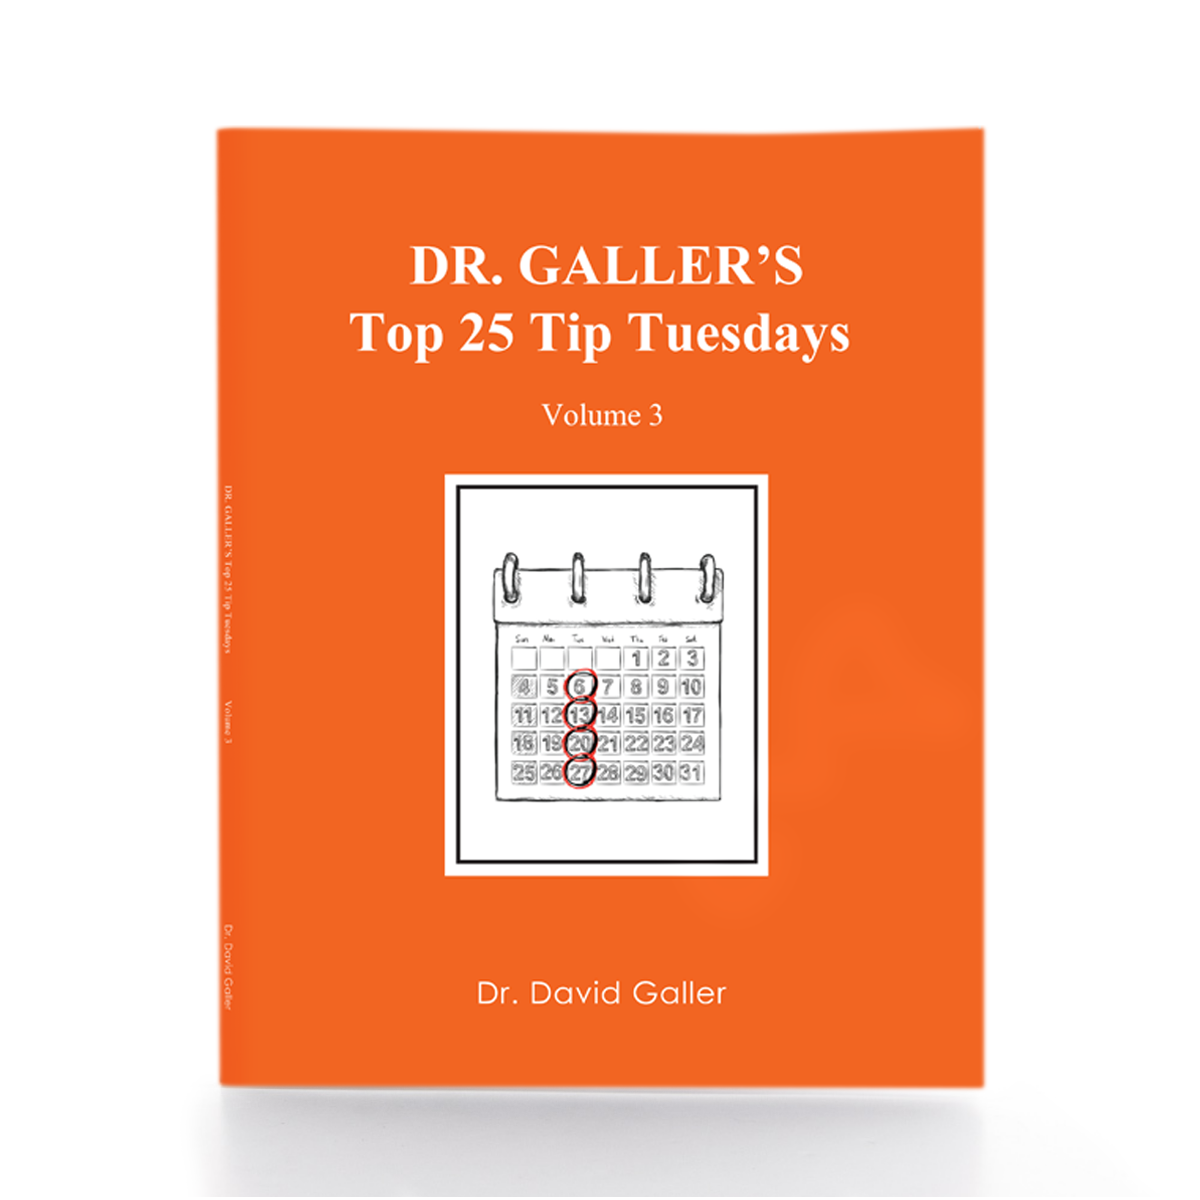 Top 25 Tip Tuesdays by Dr David Galler - Volume 3